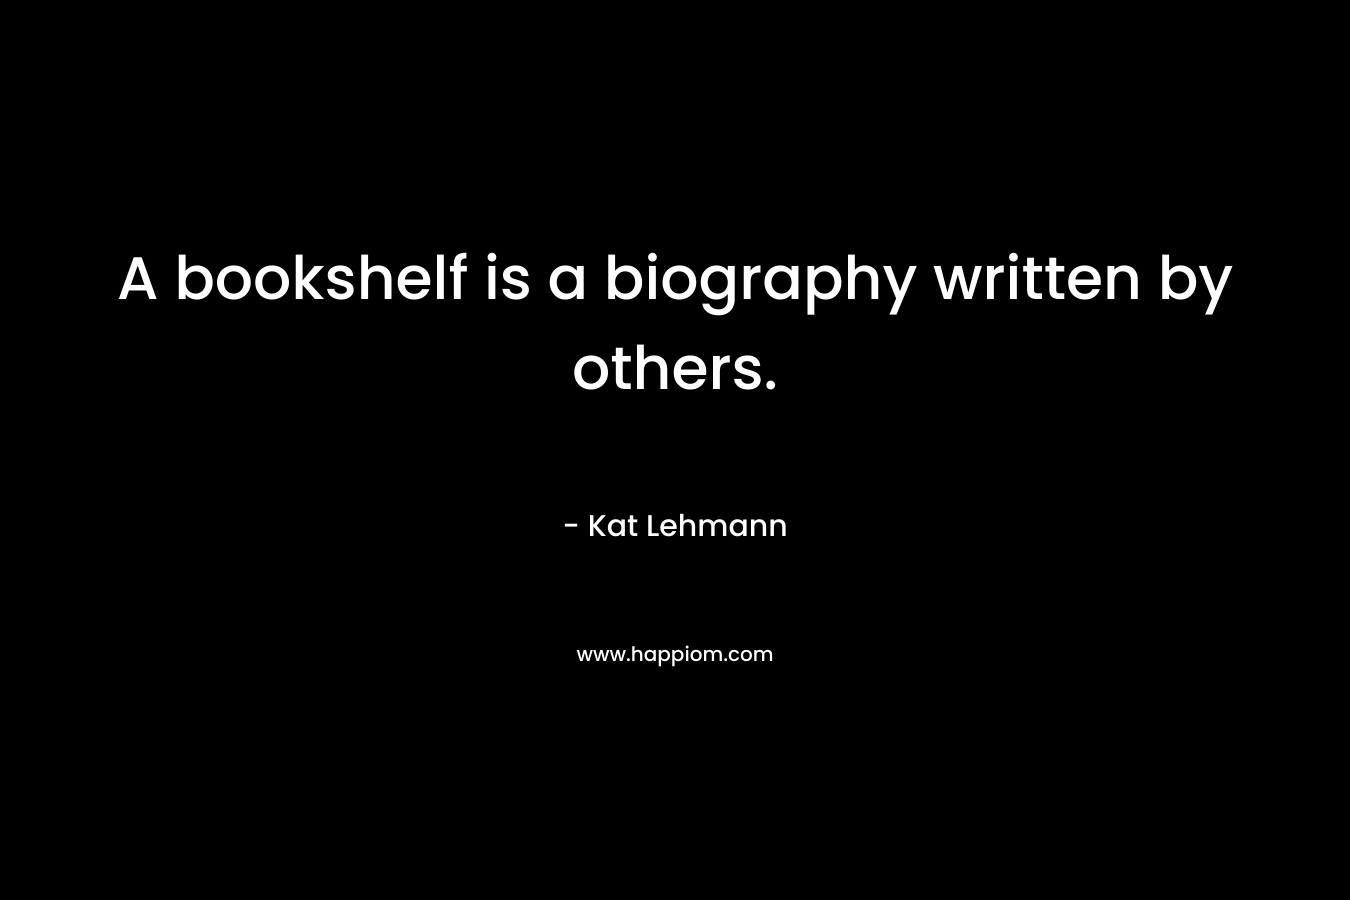 A bookshelf is a biography written by others. – Kat Lehmann